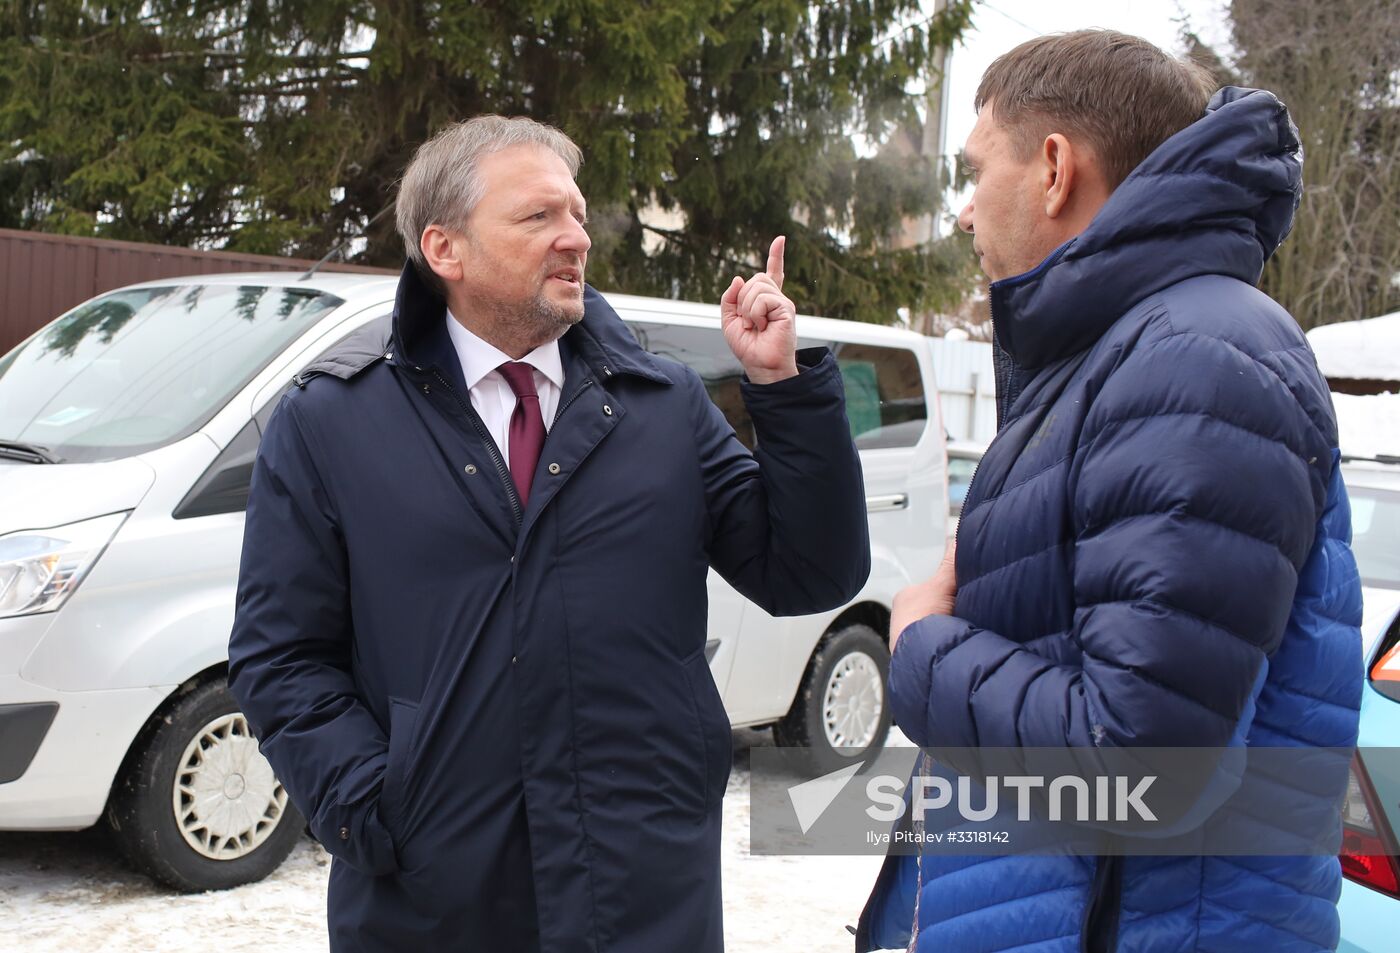 Russian presidential candidate Boris Titov visits Kuvshinka private daycare